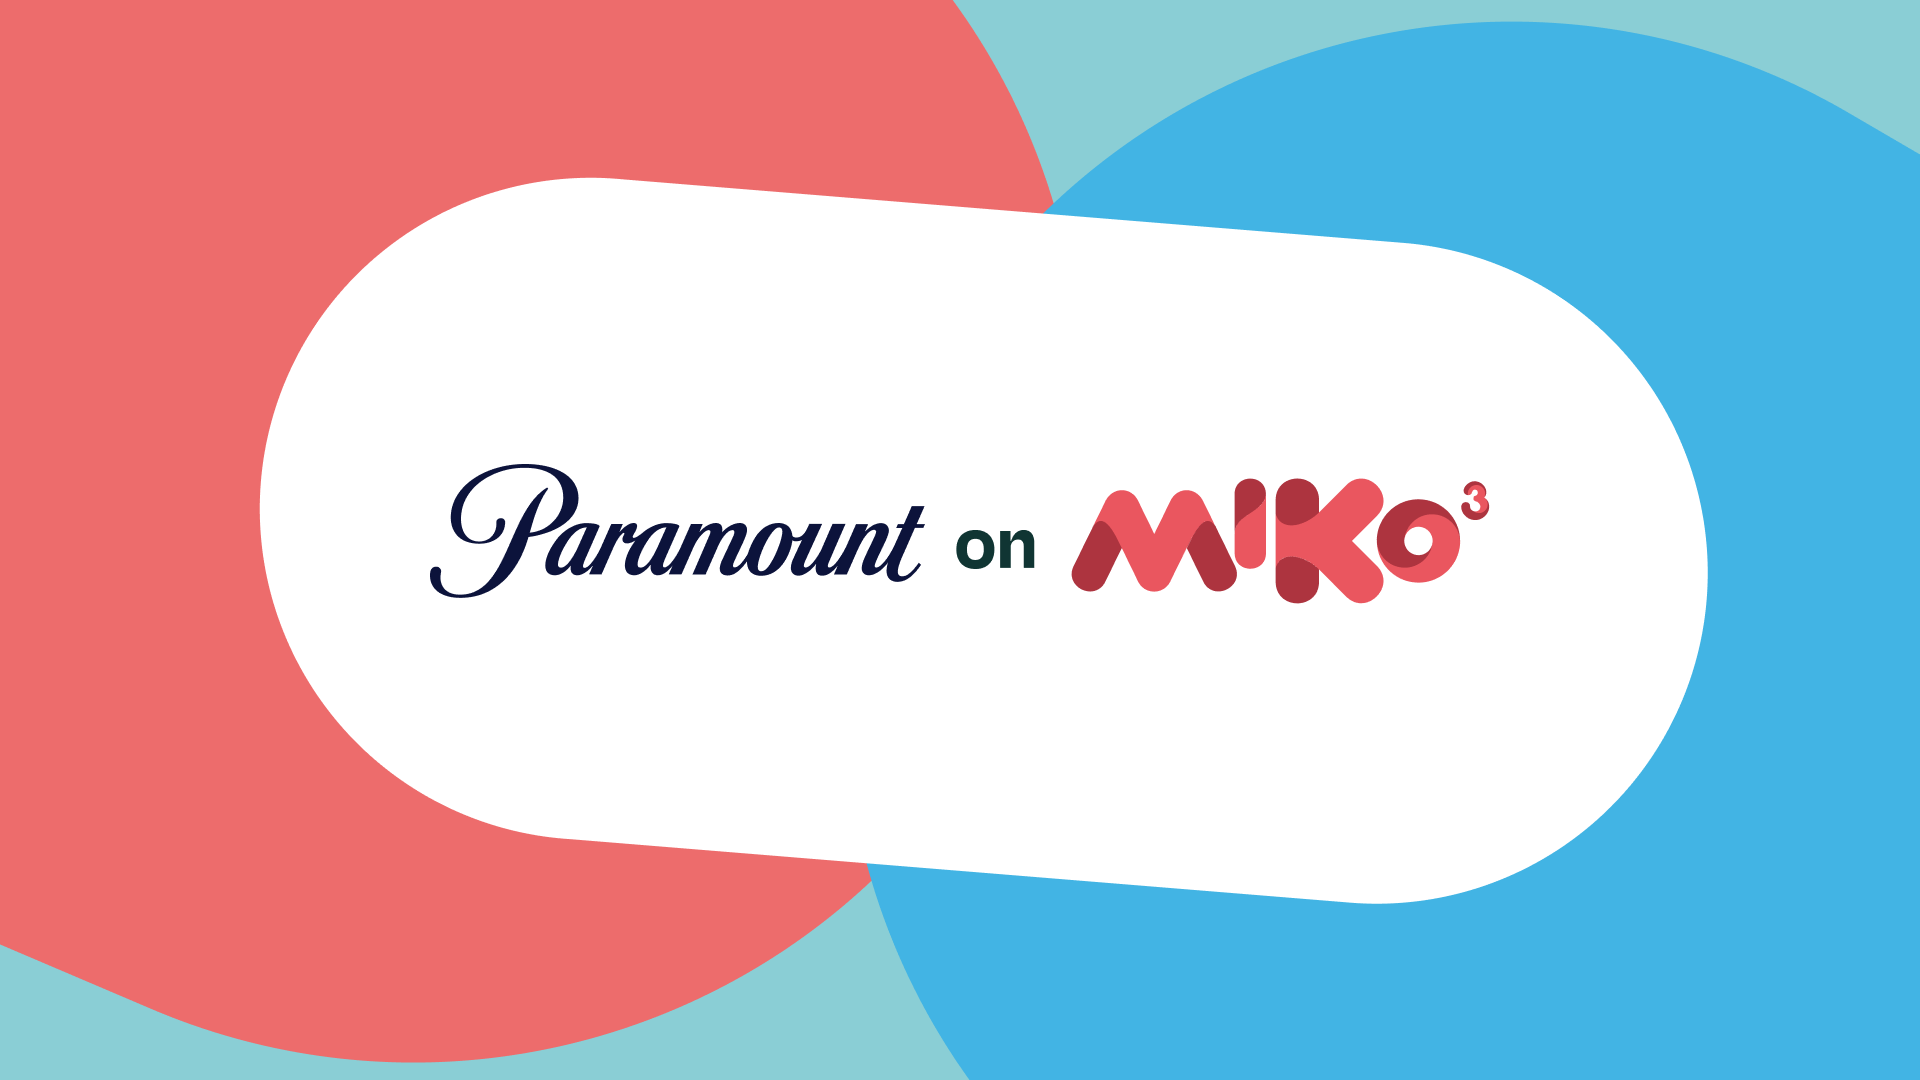 Miko and Paramount Consumer Products Partnership Brings Cartoon Stars to Kids Robot Platform